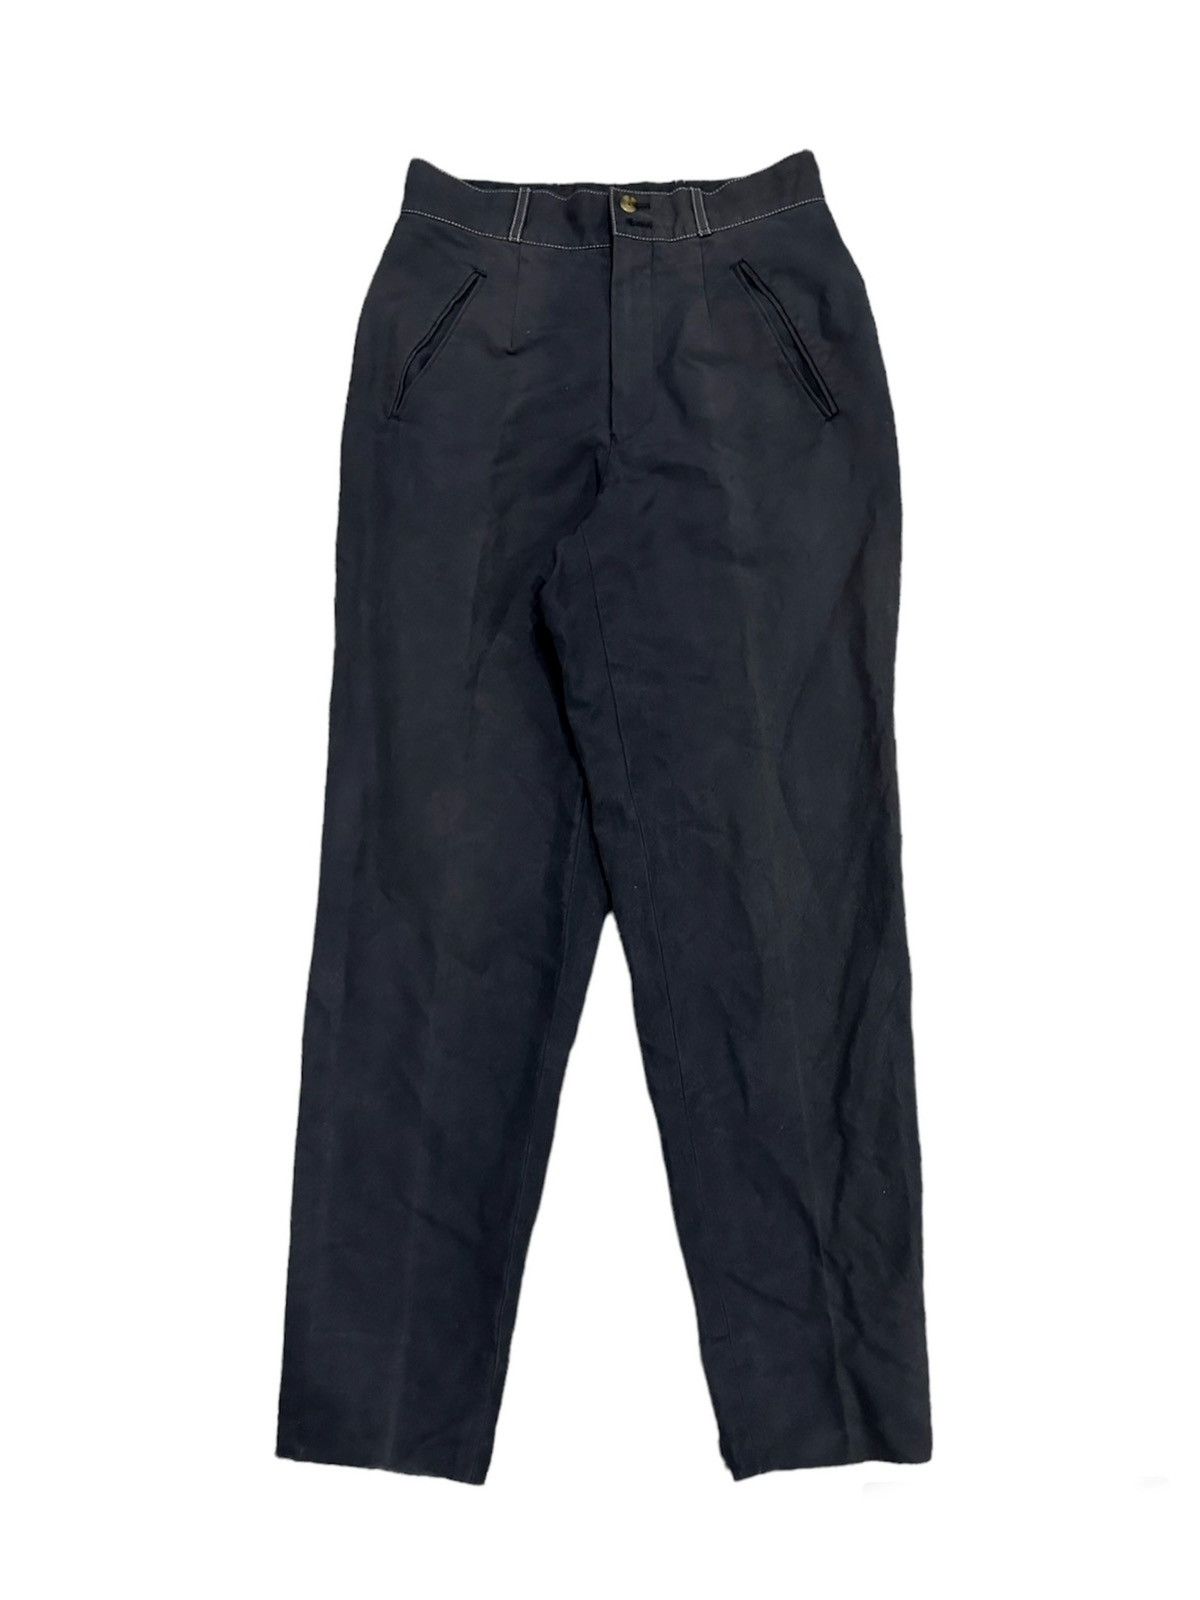 Jean Paul Gaultier Trousers Black Faded Pant - 1